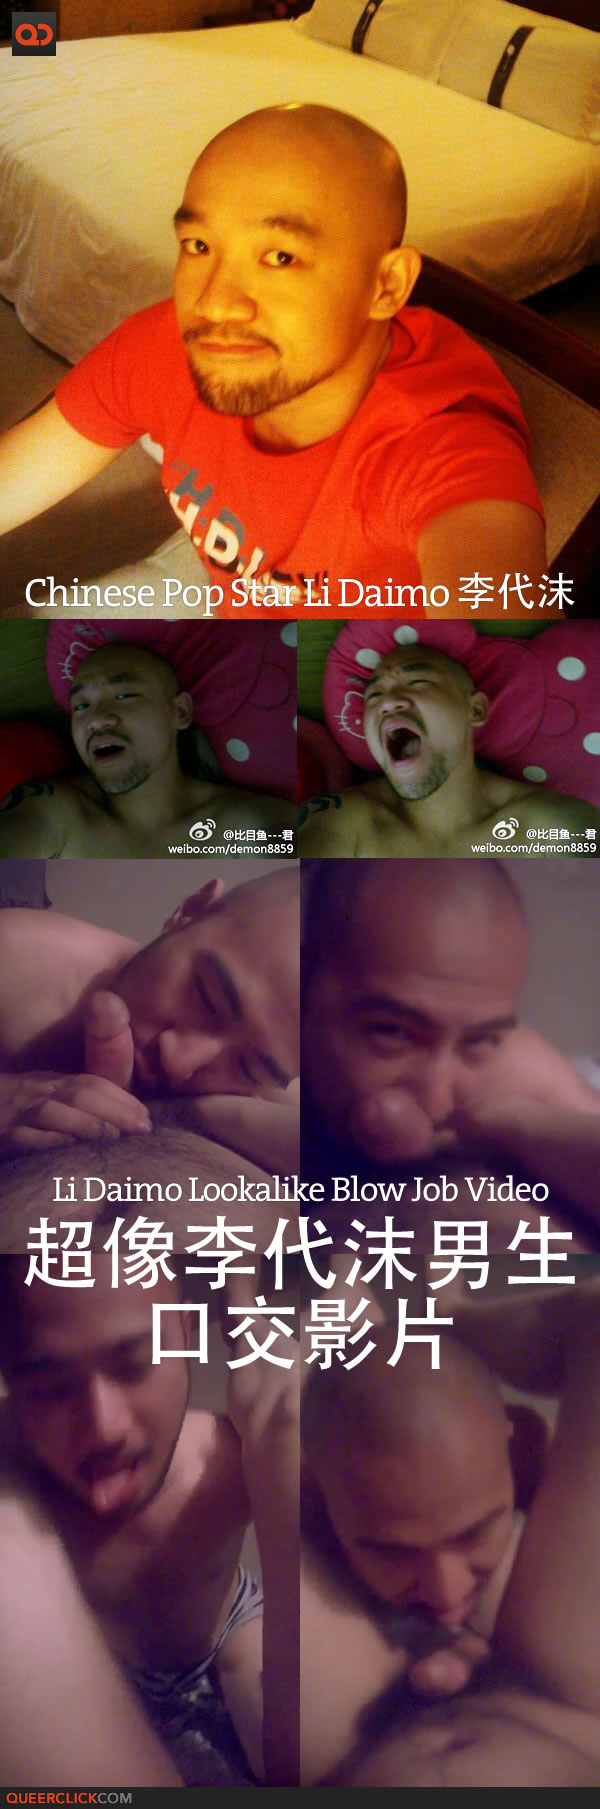 chinese-pop-star-li-daimo-lookalike-blow-job-video-1